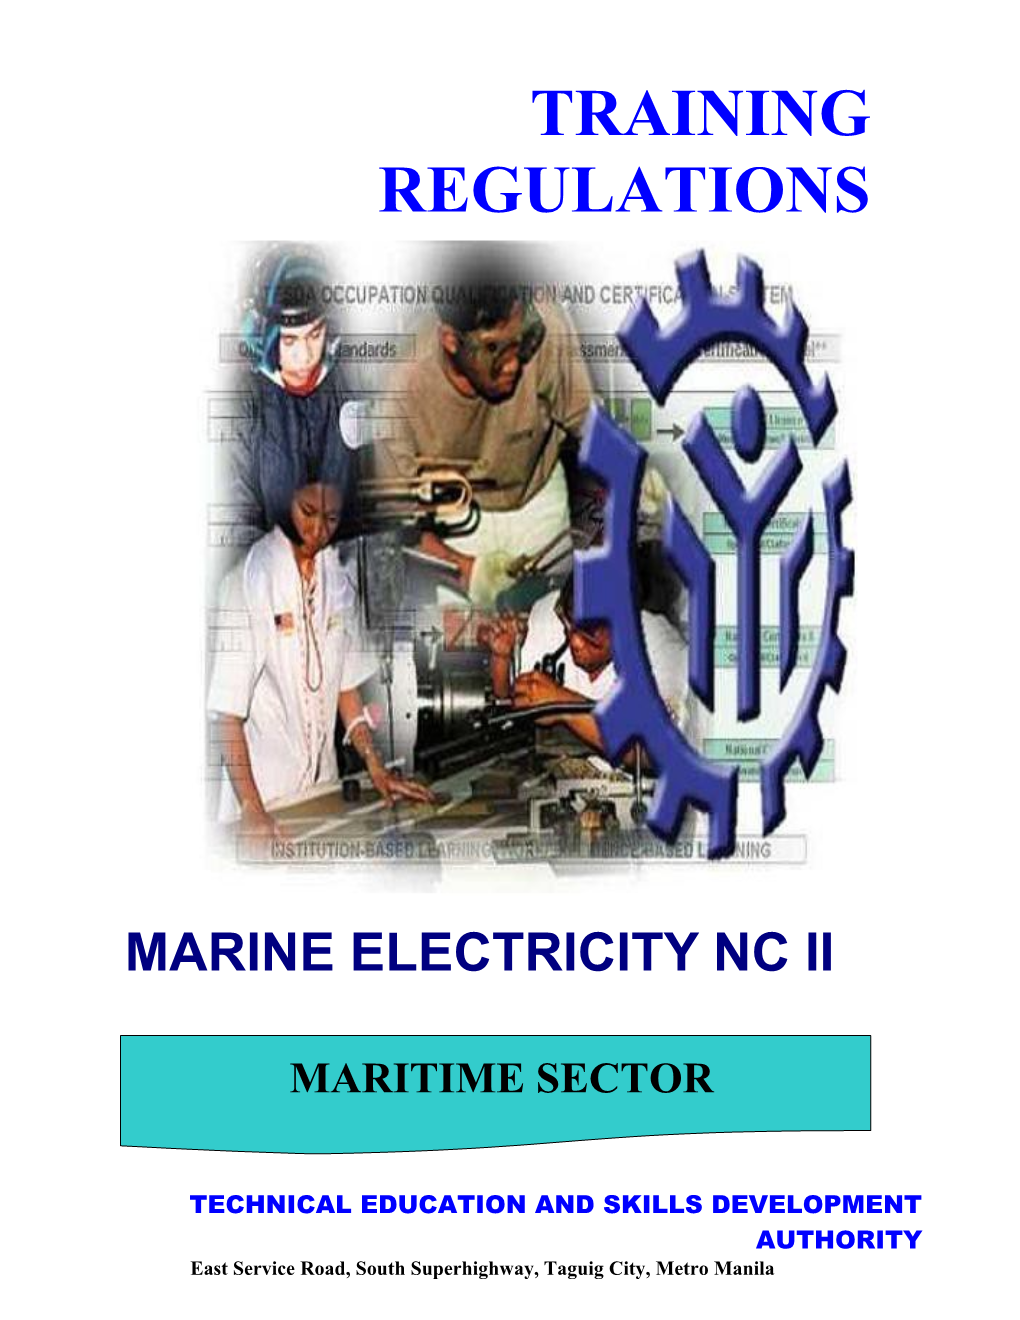 TR- Marine Electricity NC II Promulgated September 2008